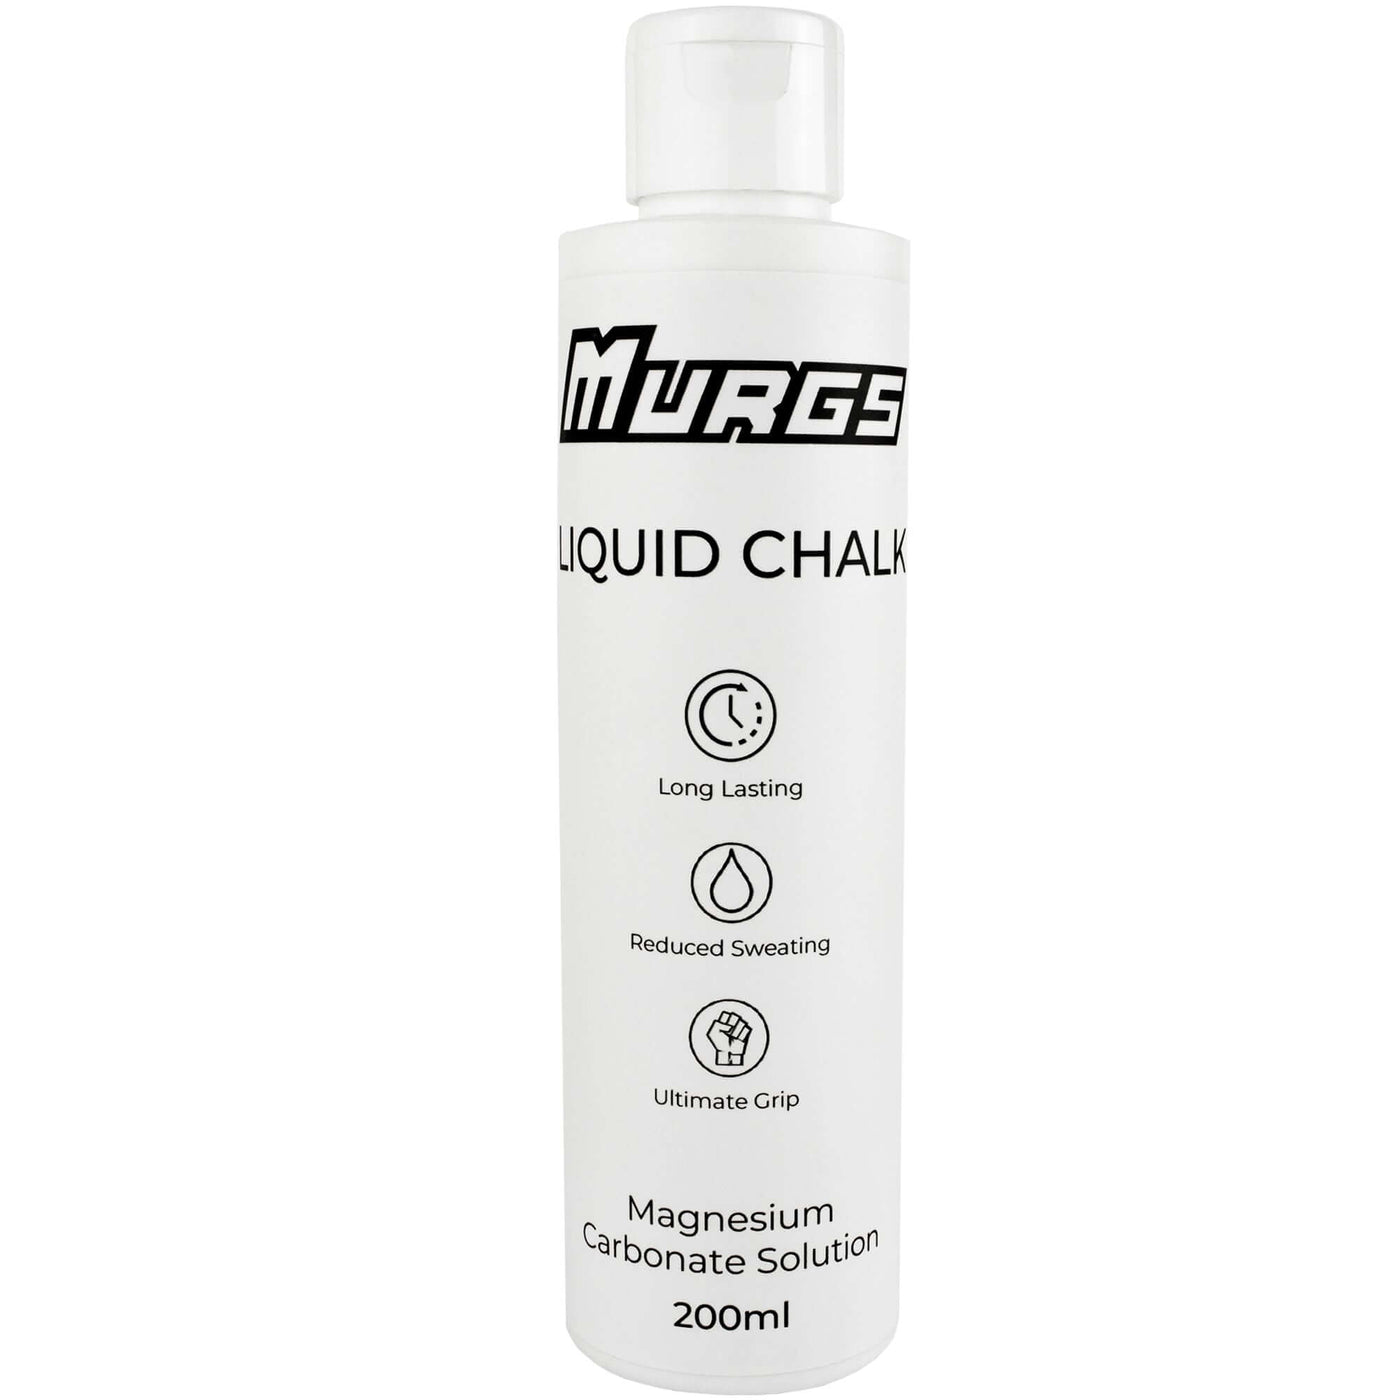 Murgs liquid chalk 200ml bottle